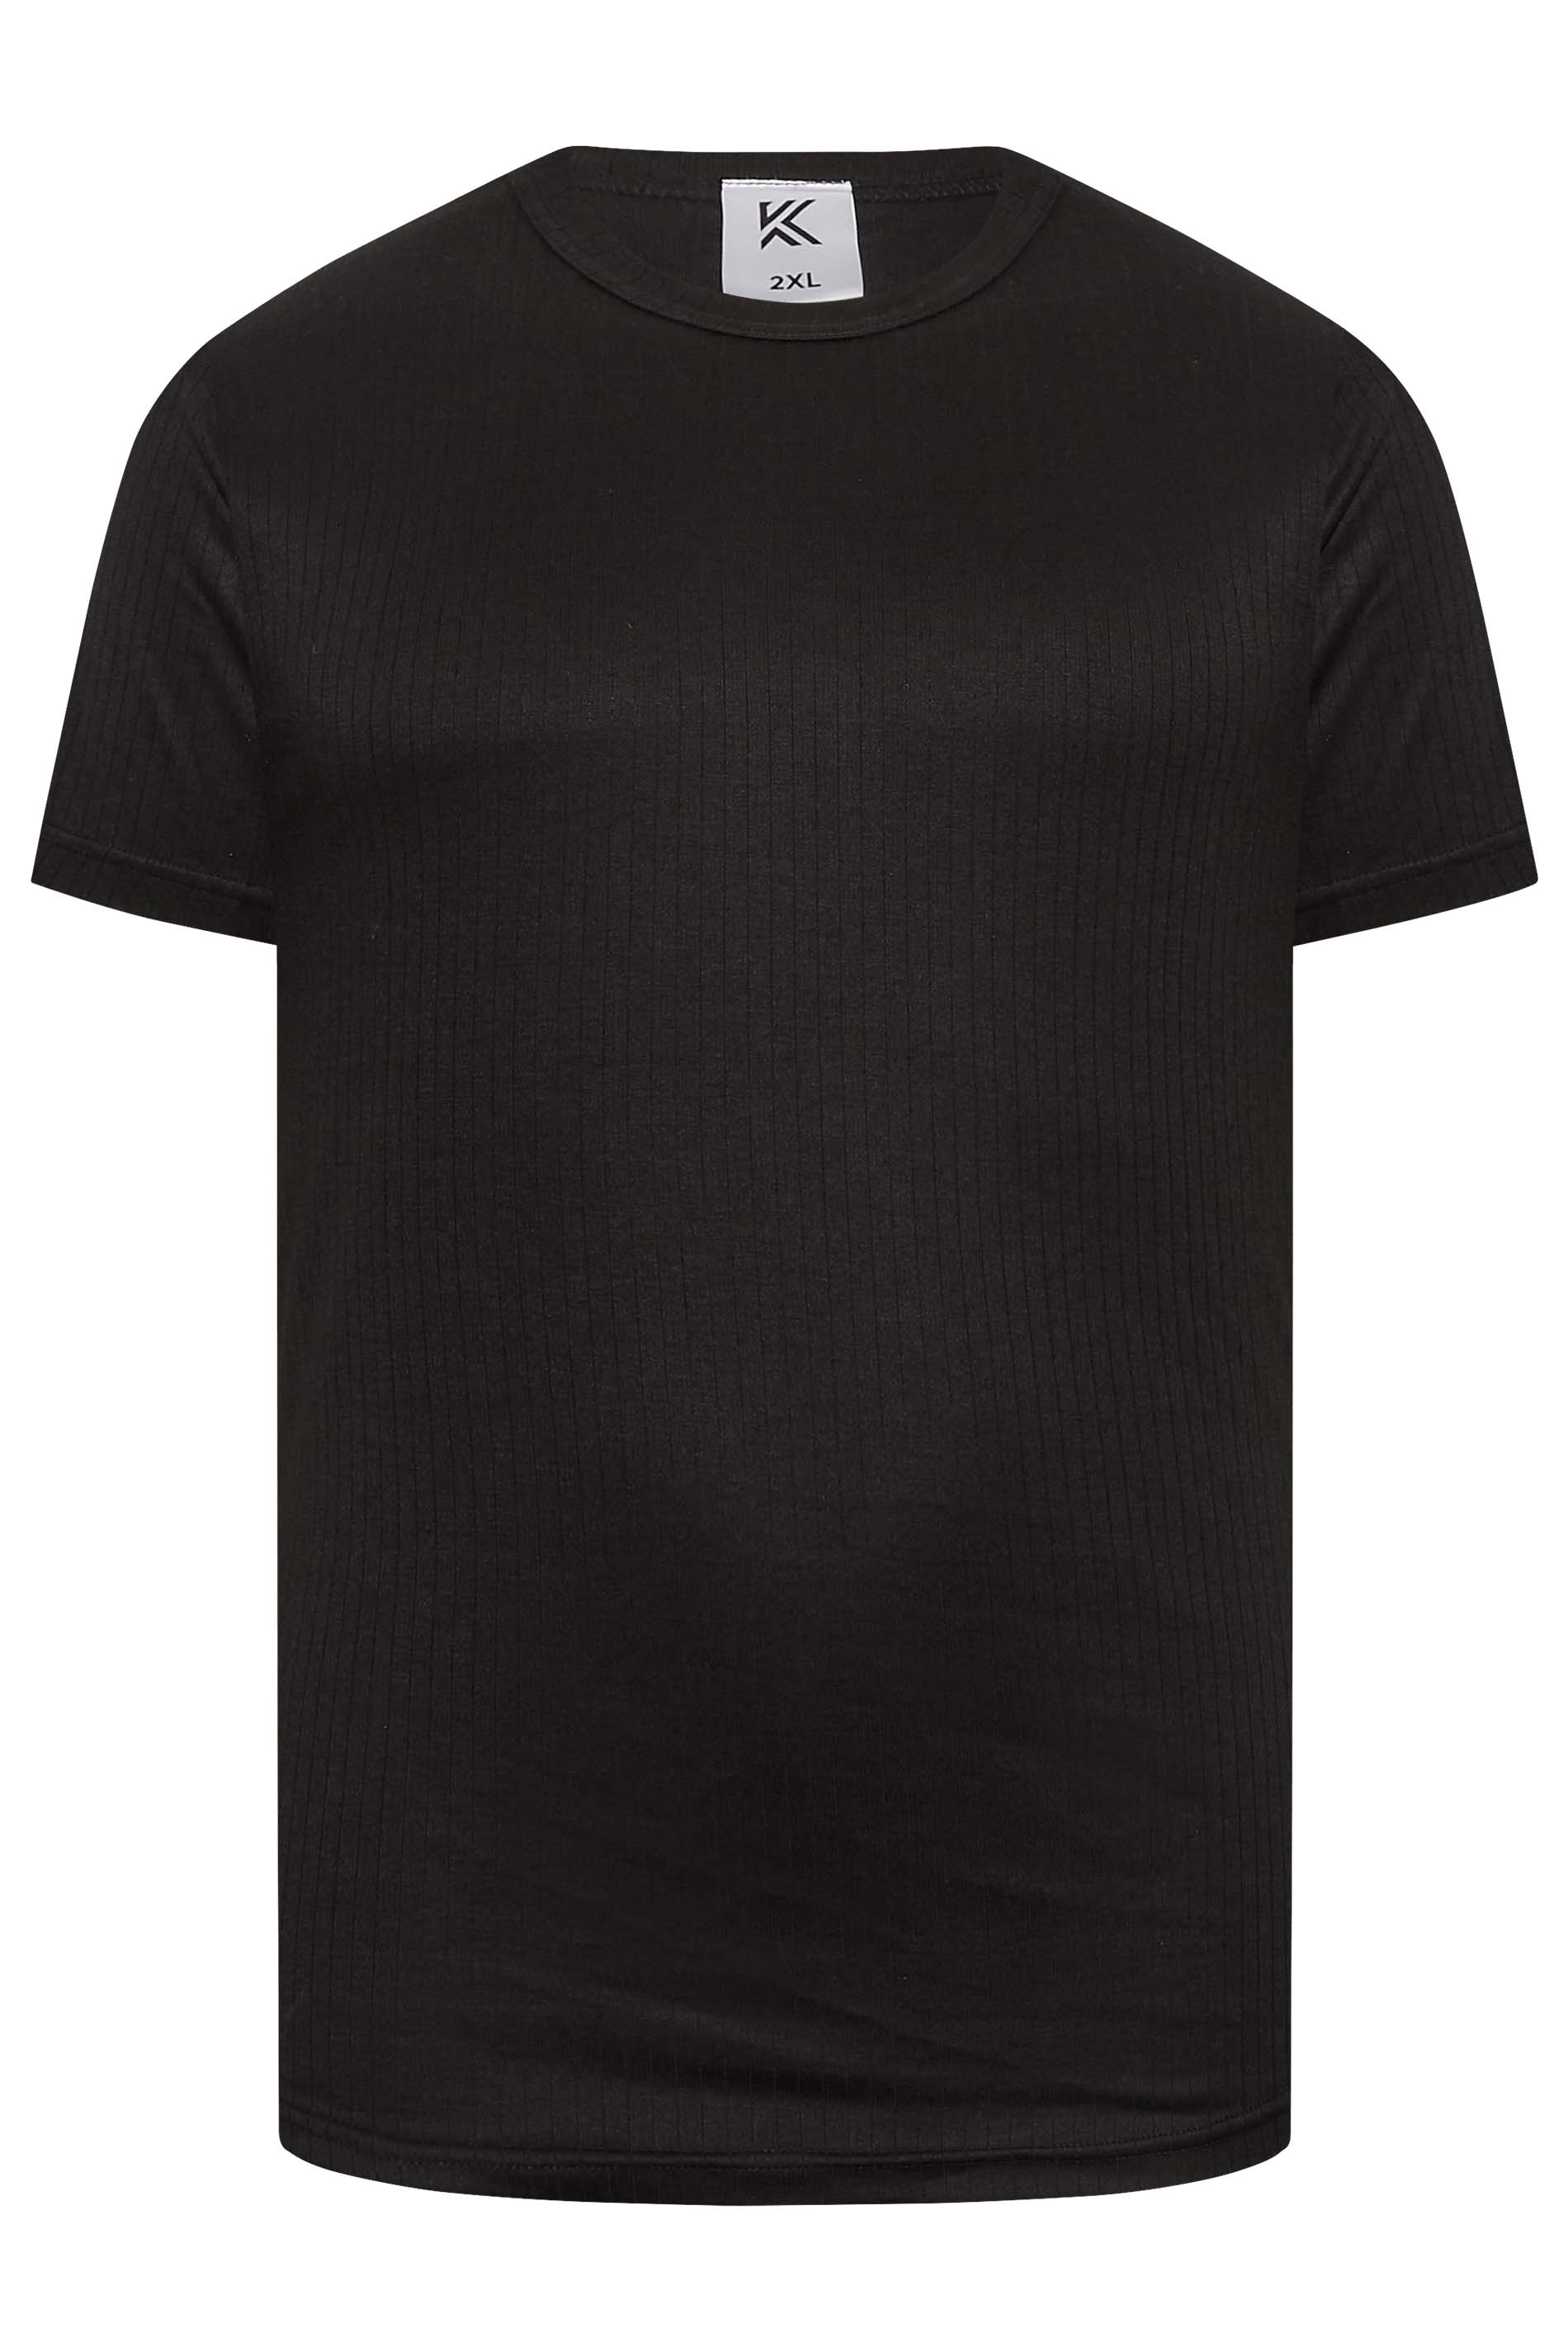 KAM Big & Tall Short Sleeve Thermal T-Shirt | BadRhino 3